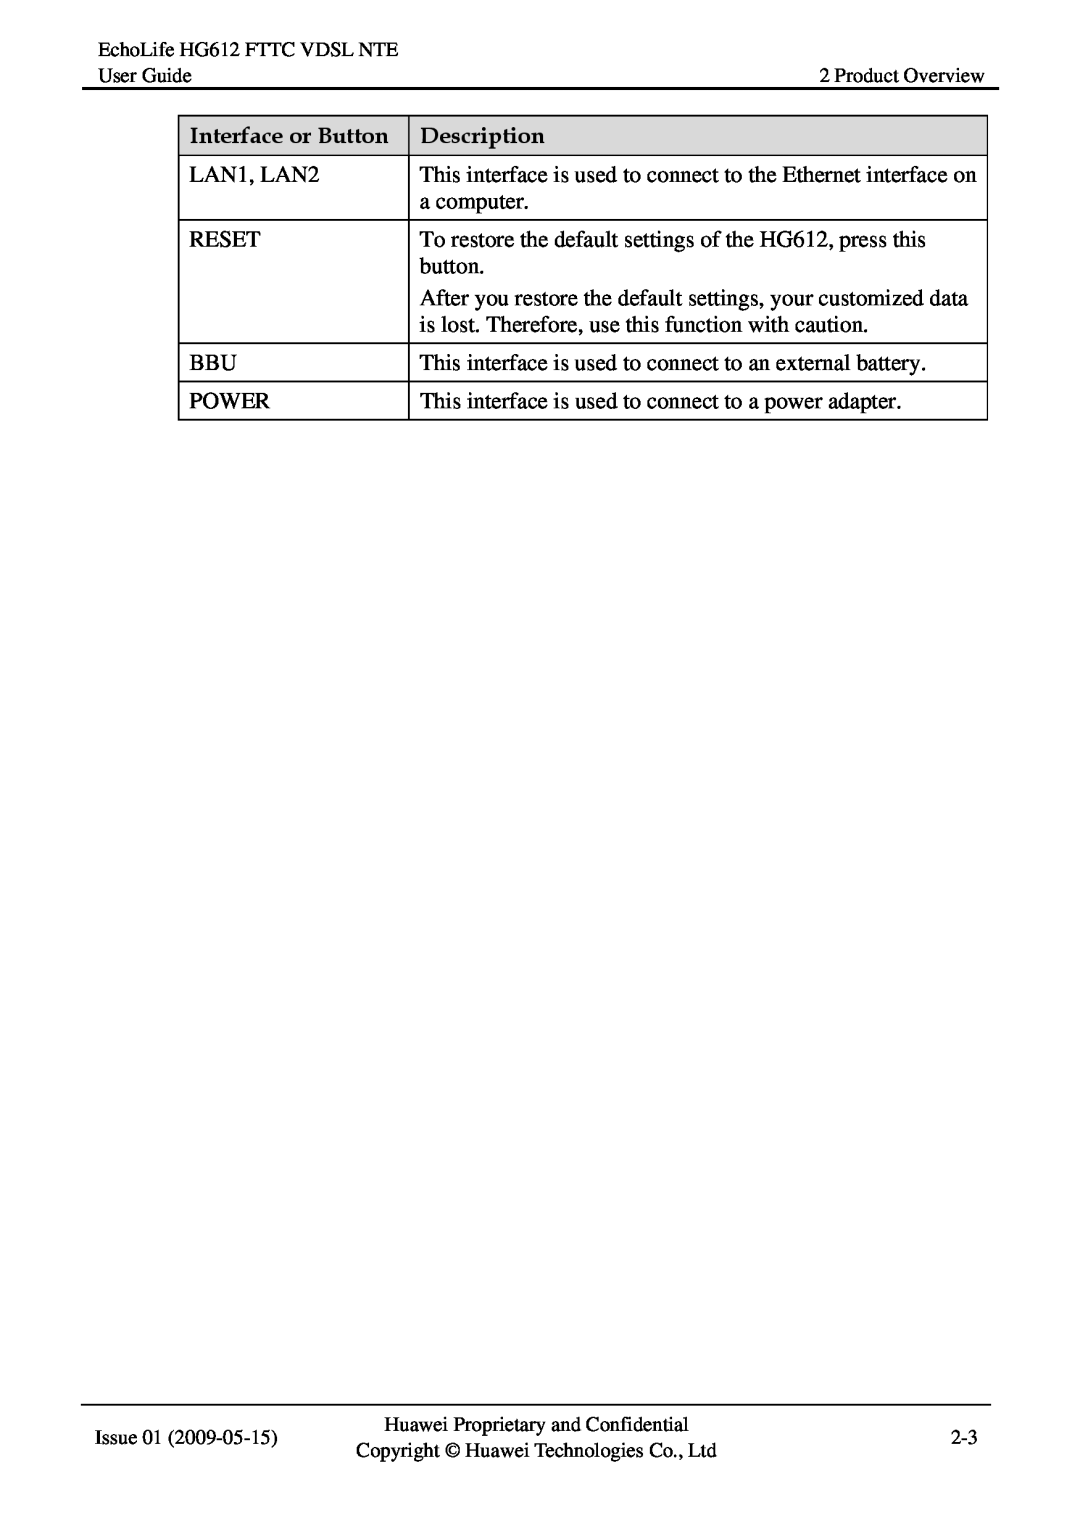 Huawei HG612FTTC VDSL NTE manual Interface or Button, Description 